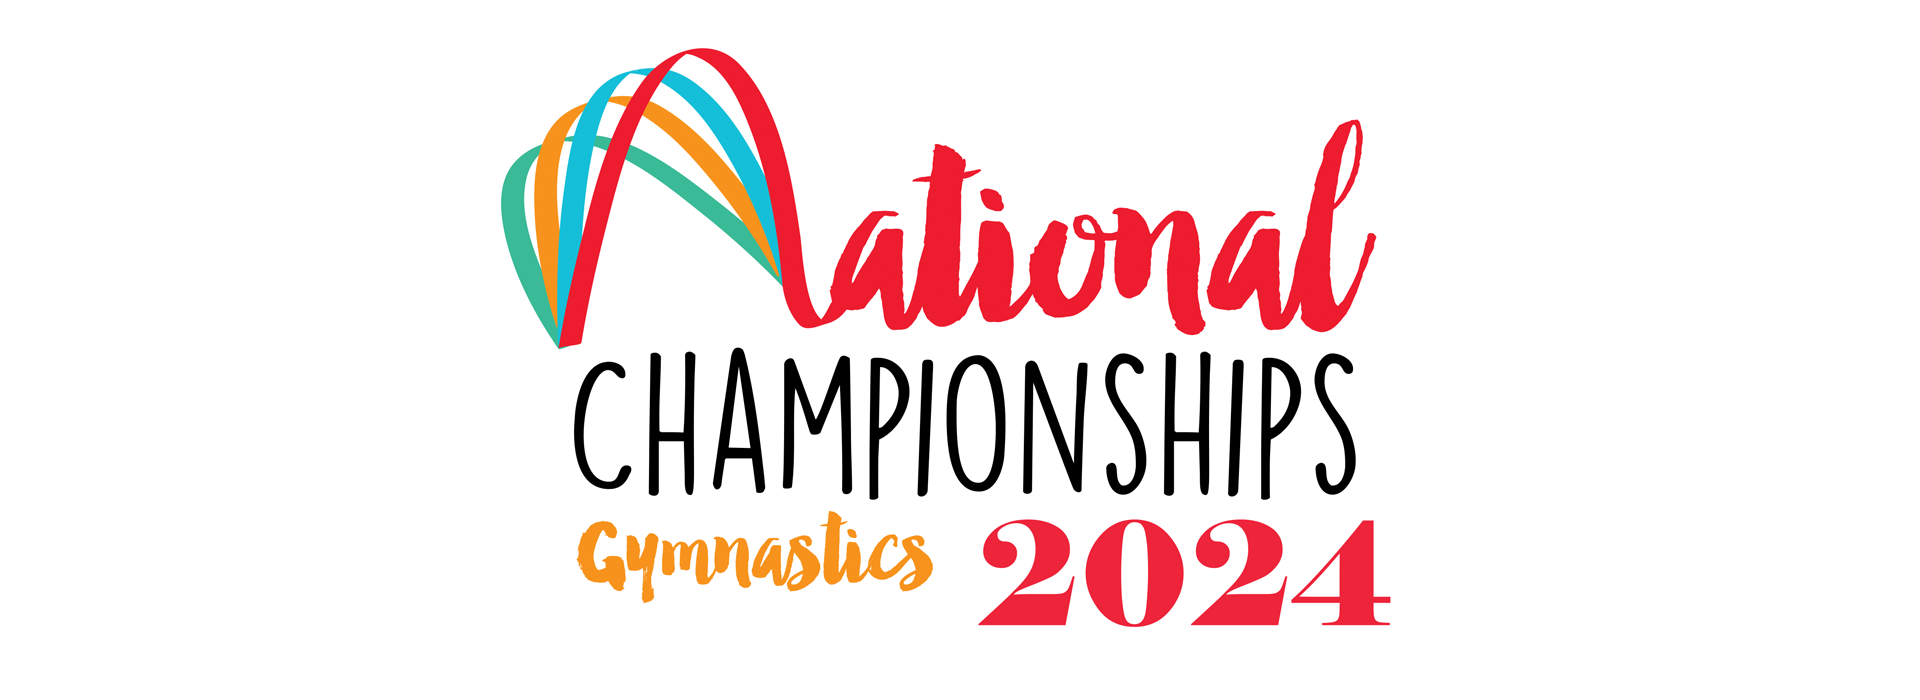 National Championships Gymnastics 2024 - Artistic Junior Championships